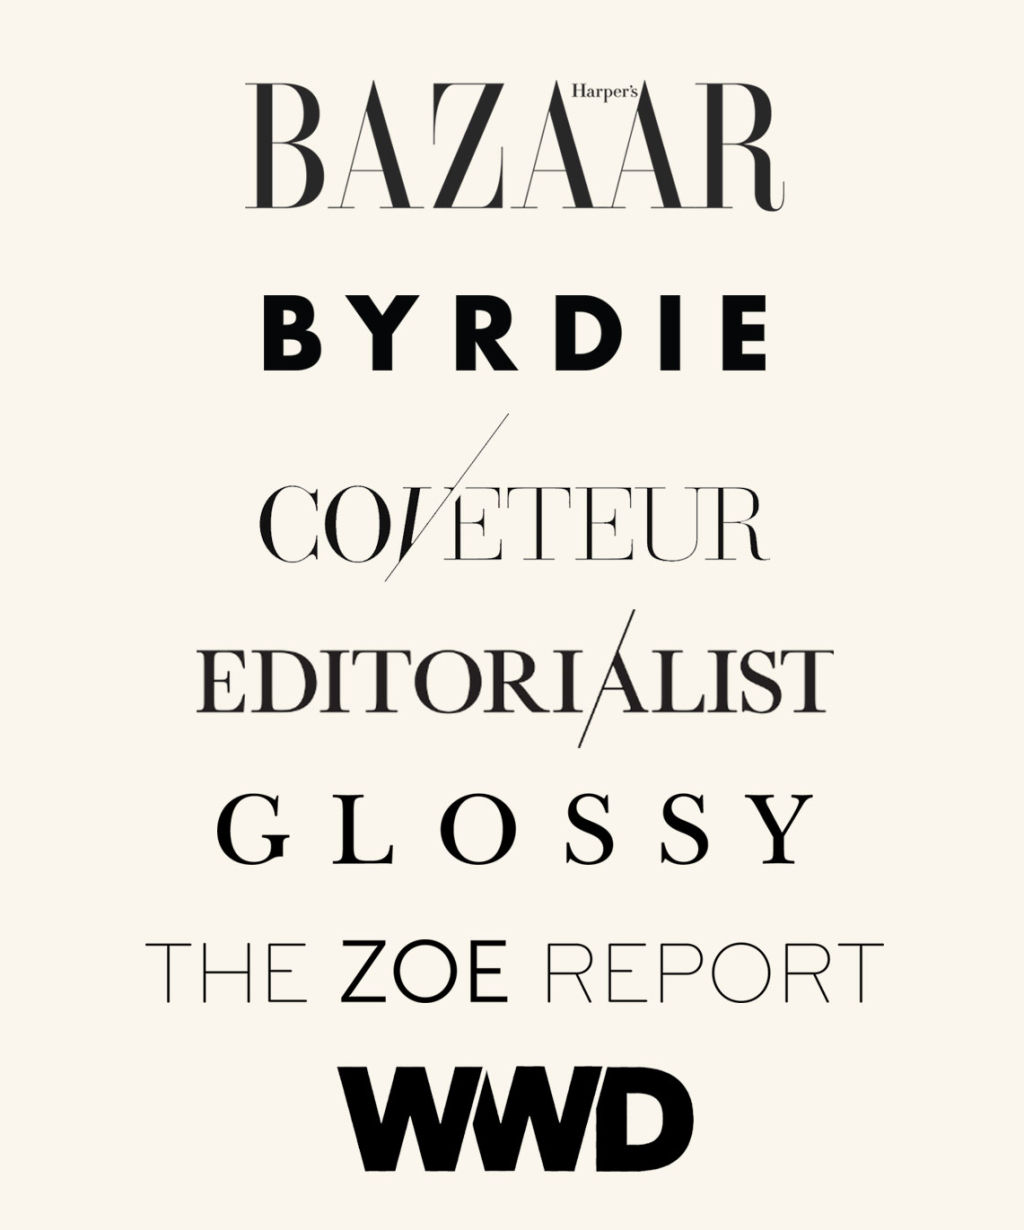 Press that have fearured Veracity: Harper's Bazaar, Byrdie, Coveteur, Editorialist, Glossy, The Zoe Report, WWD